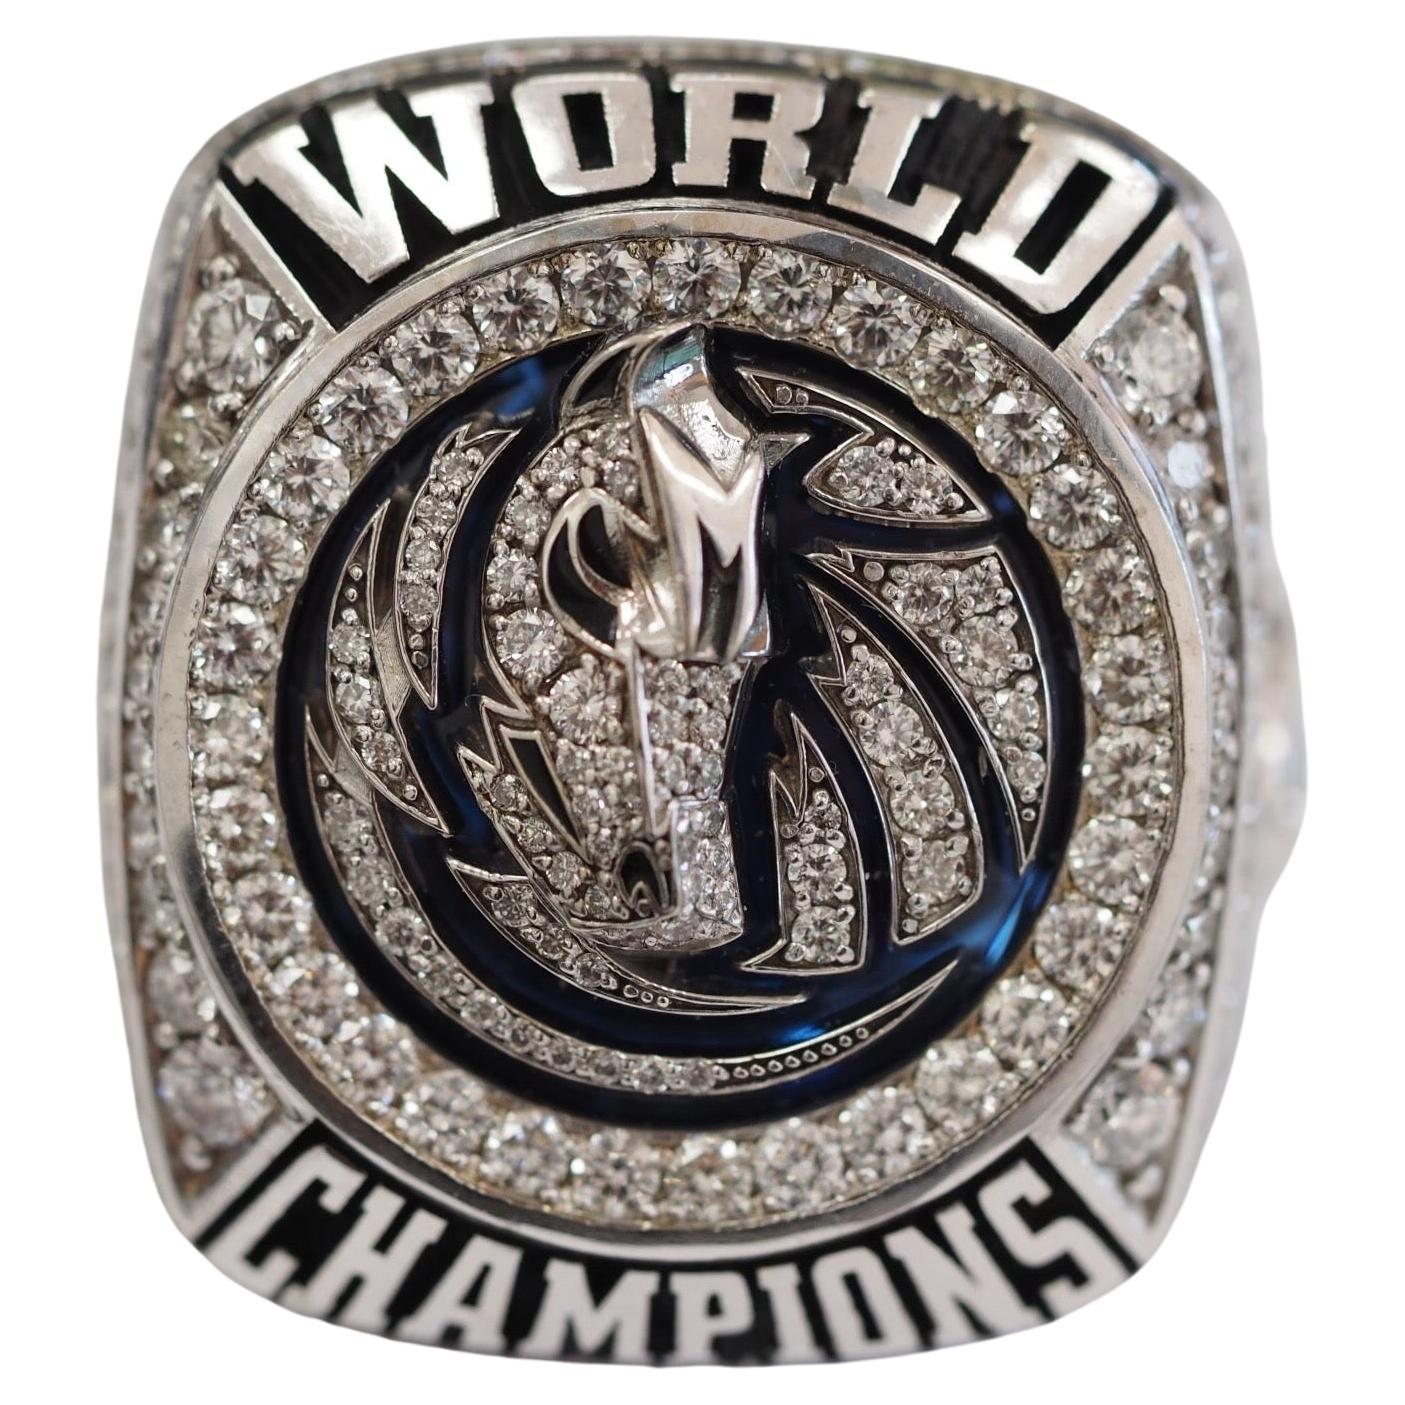 Dallas Mavericks: The 2011 NBA World Championship Ring - Uptown